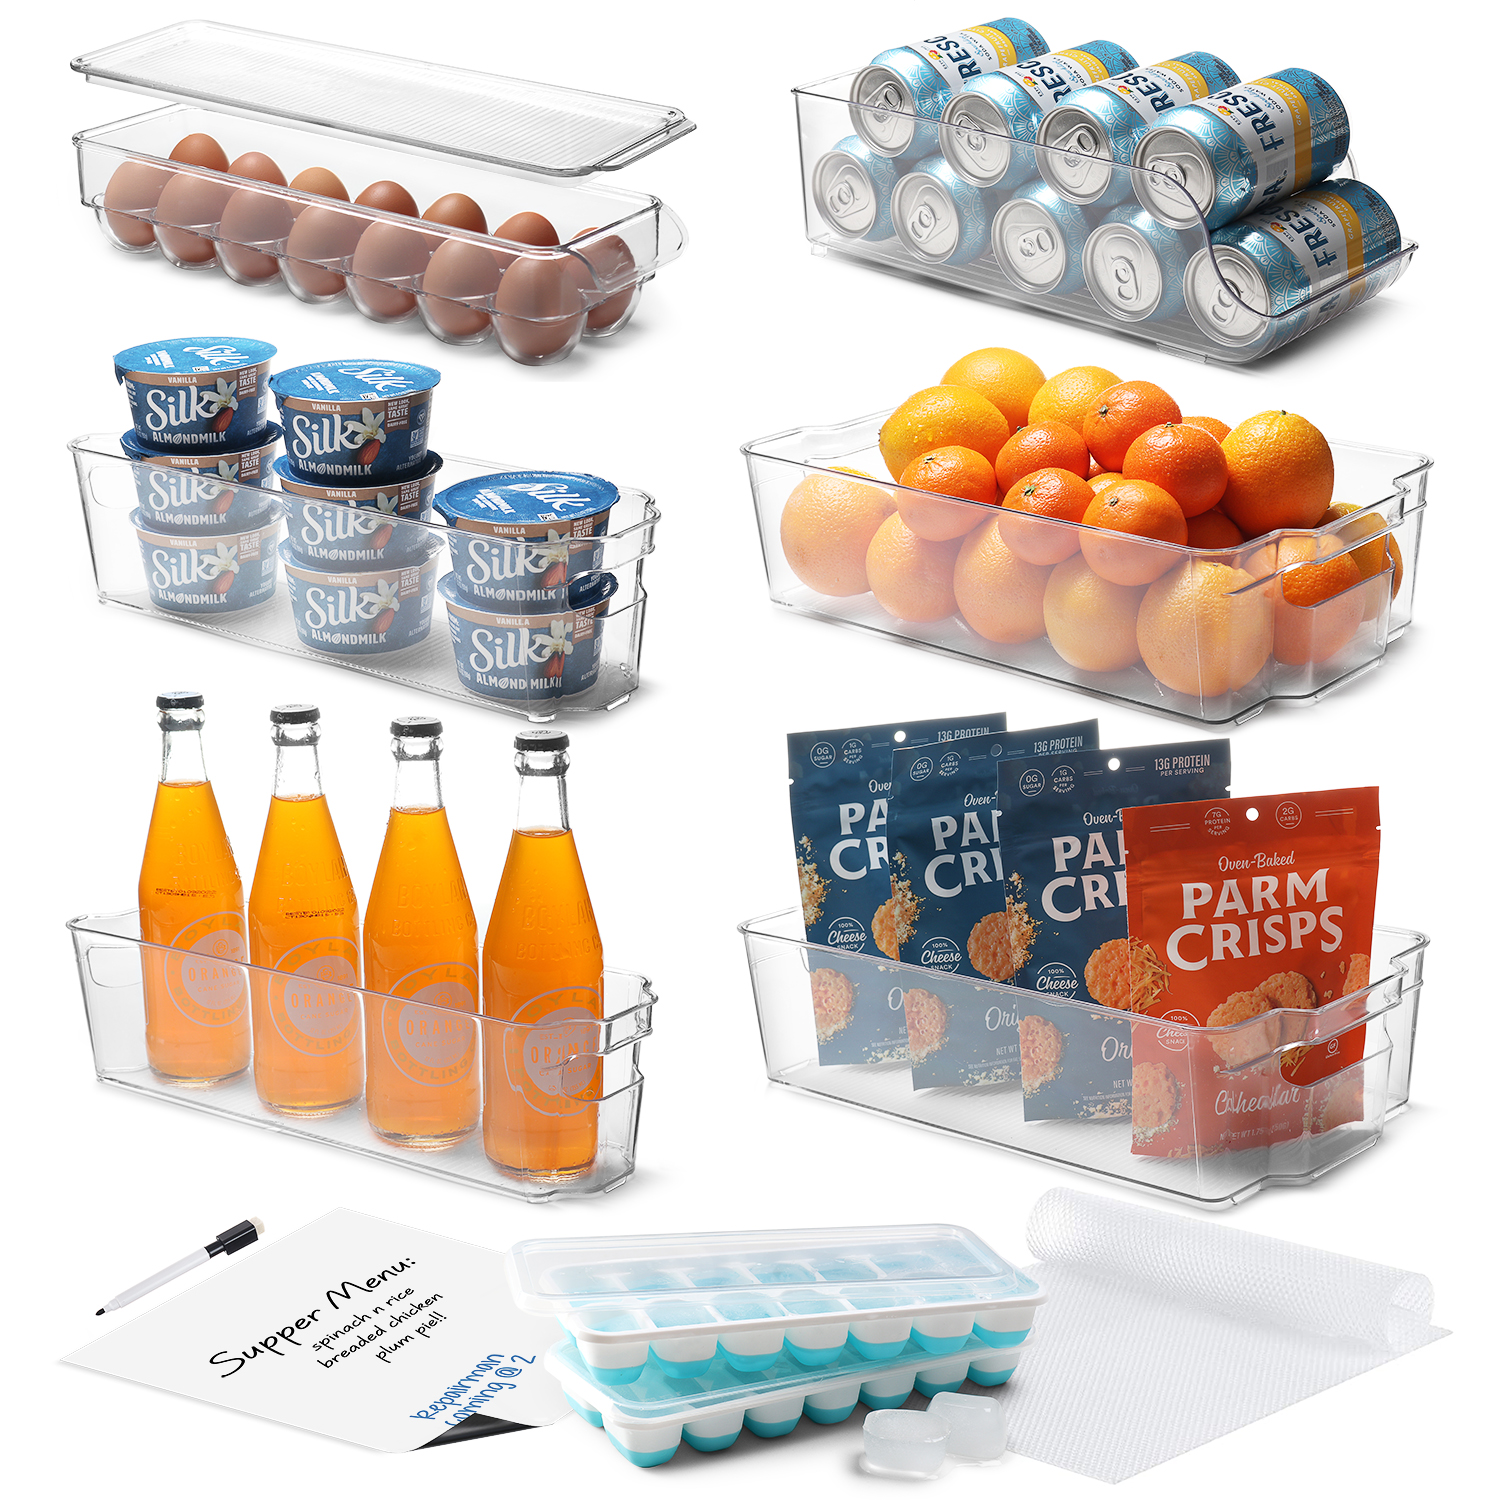 SimpleHouseware Freezer Organizer Storage Bins, Clear, Set of 8 